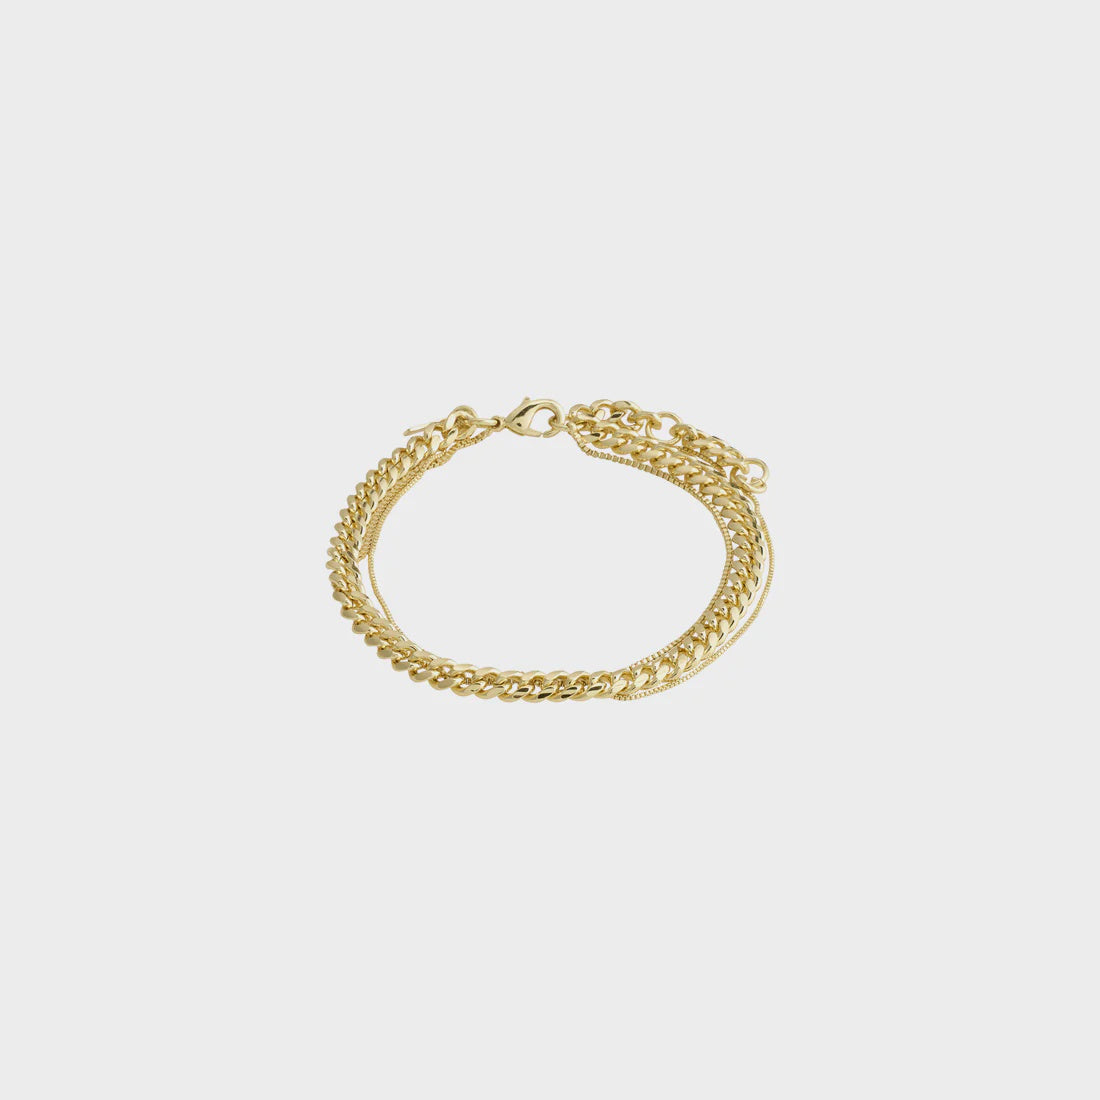 Create Bracelet - 3 in 1 gold